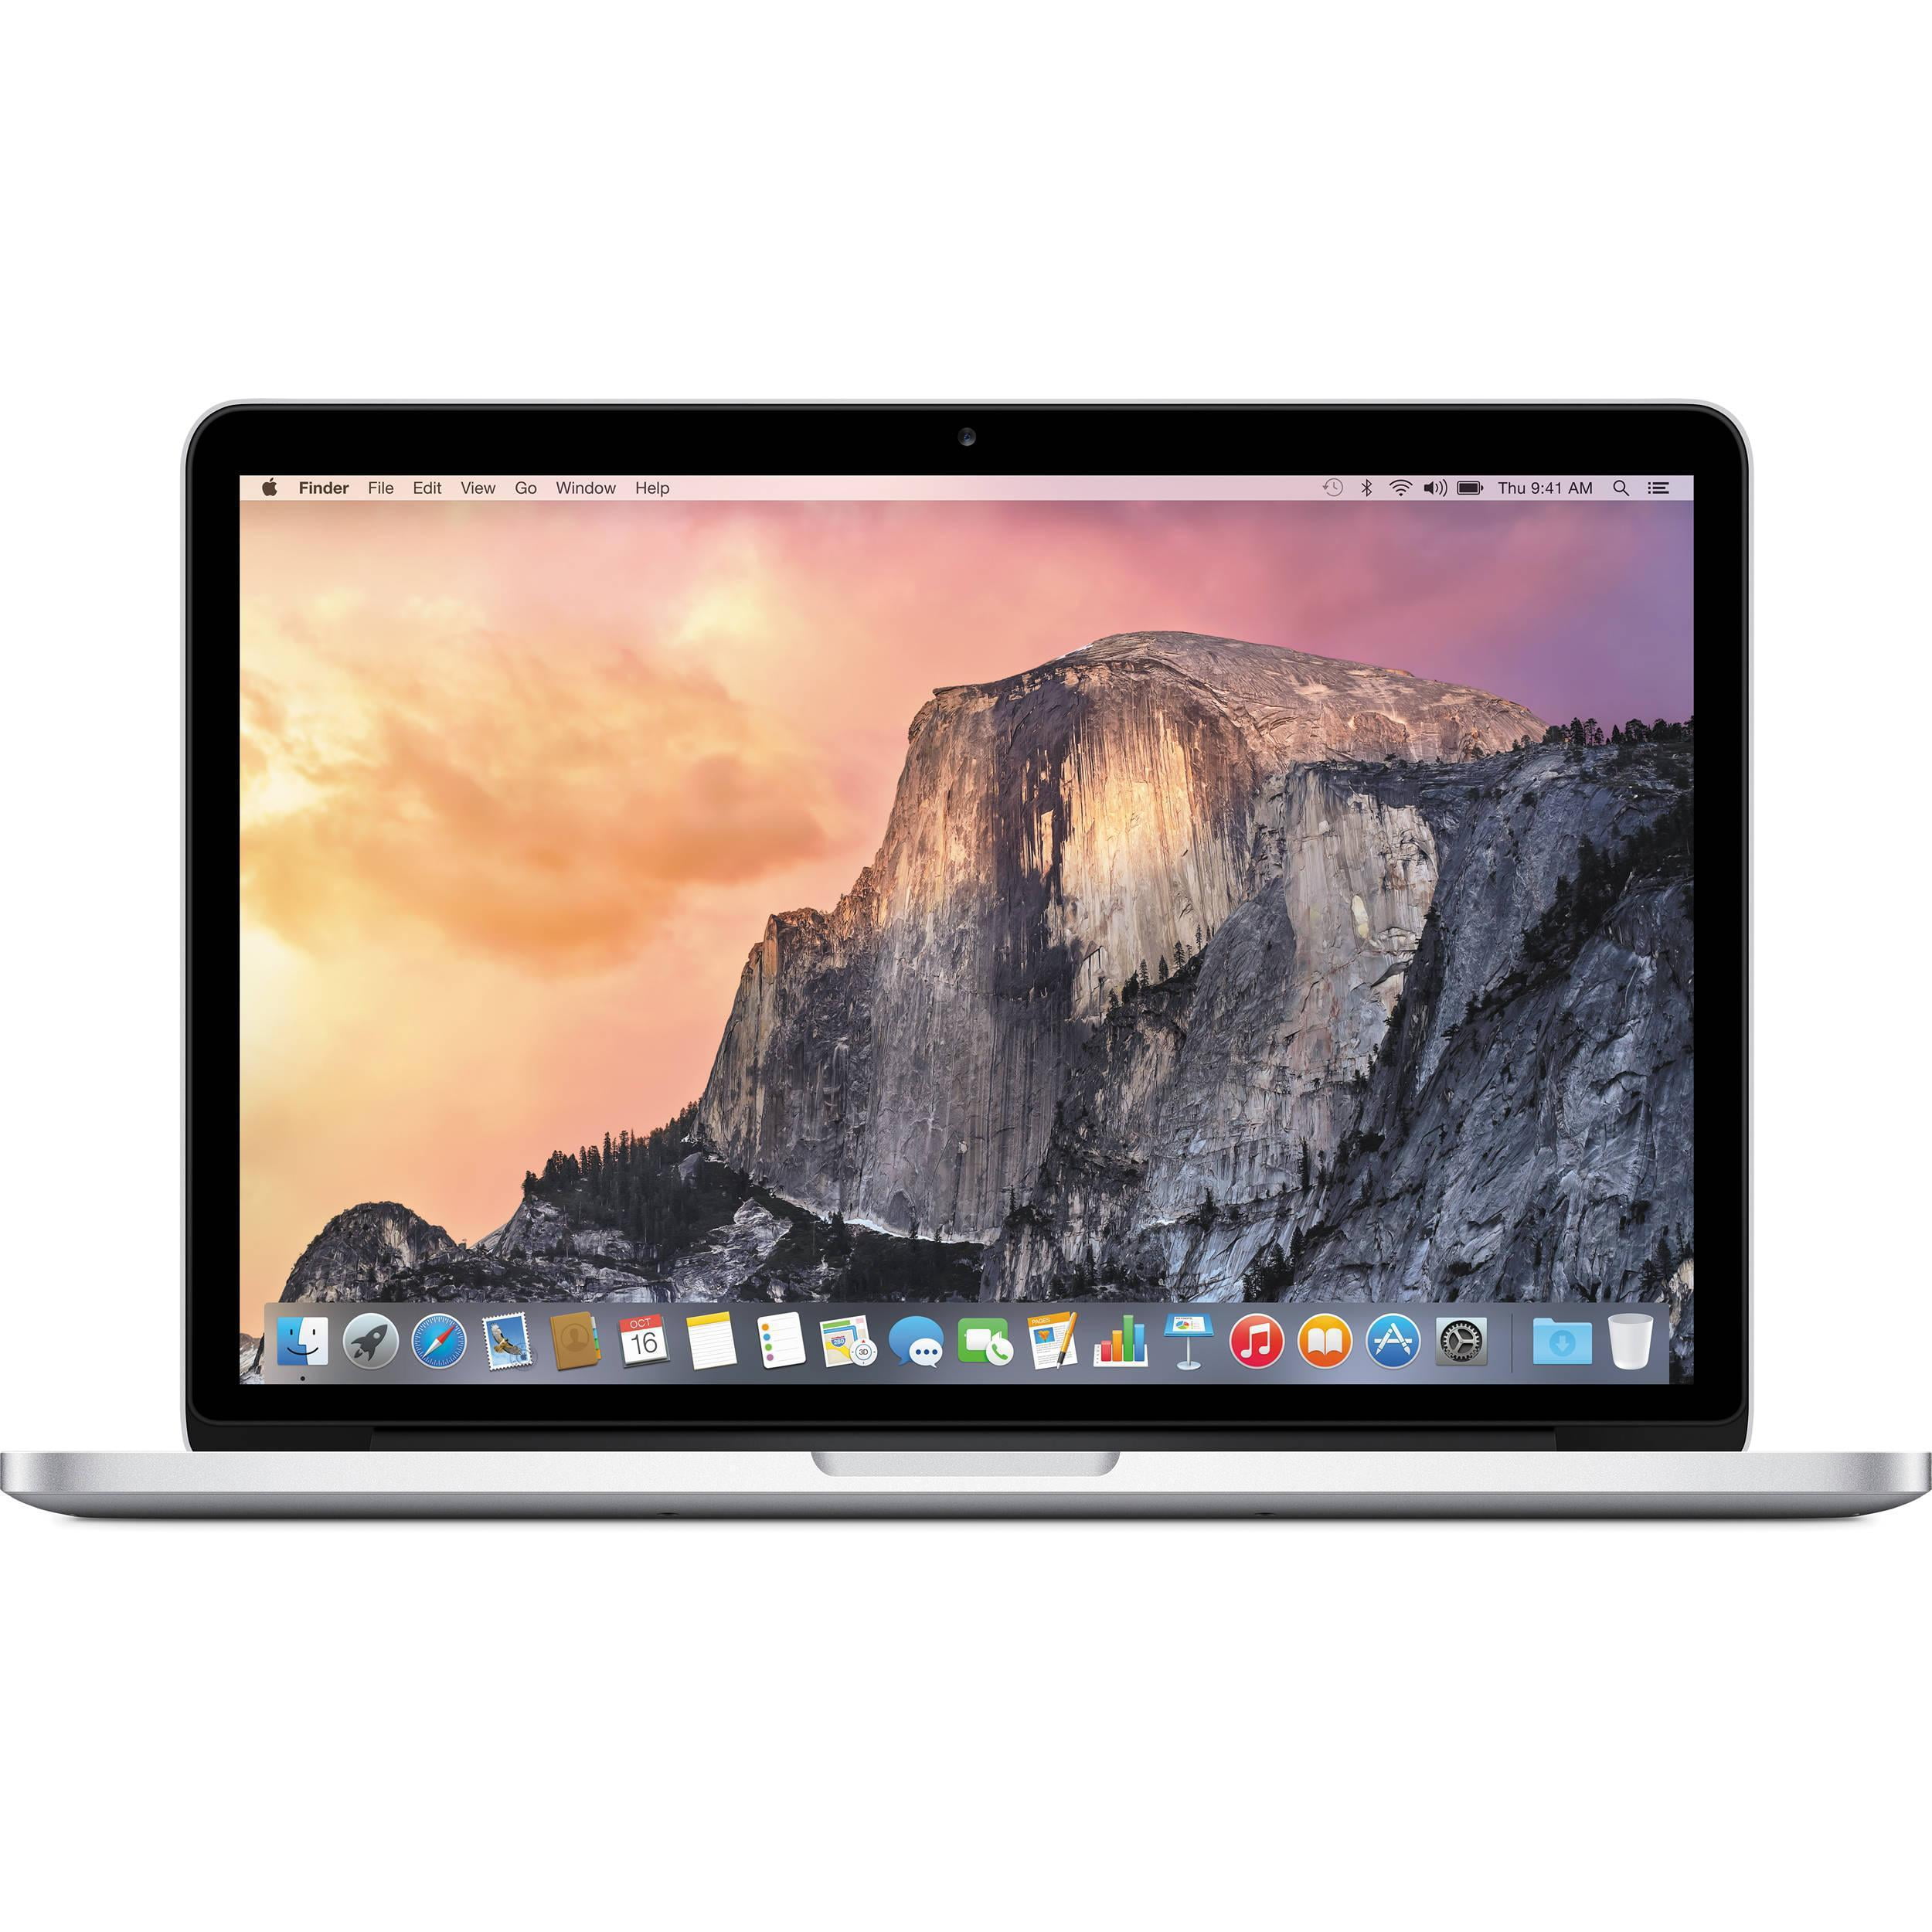 Apple Certified Used A Grade Macbook Air .3 inch Laptop 2.2GHZ Dual Core  i7 Early  MJVE2LL/A BTO  GB HD 8 GB Memory  x  Display Mac